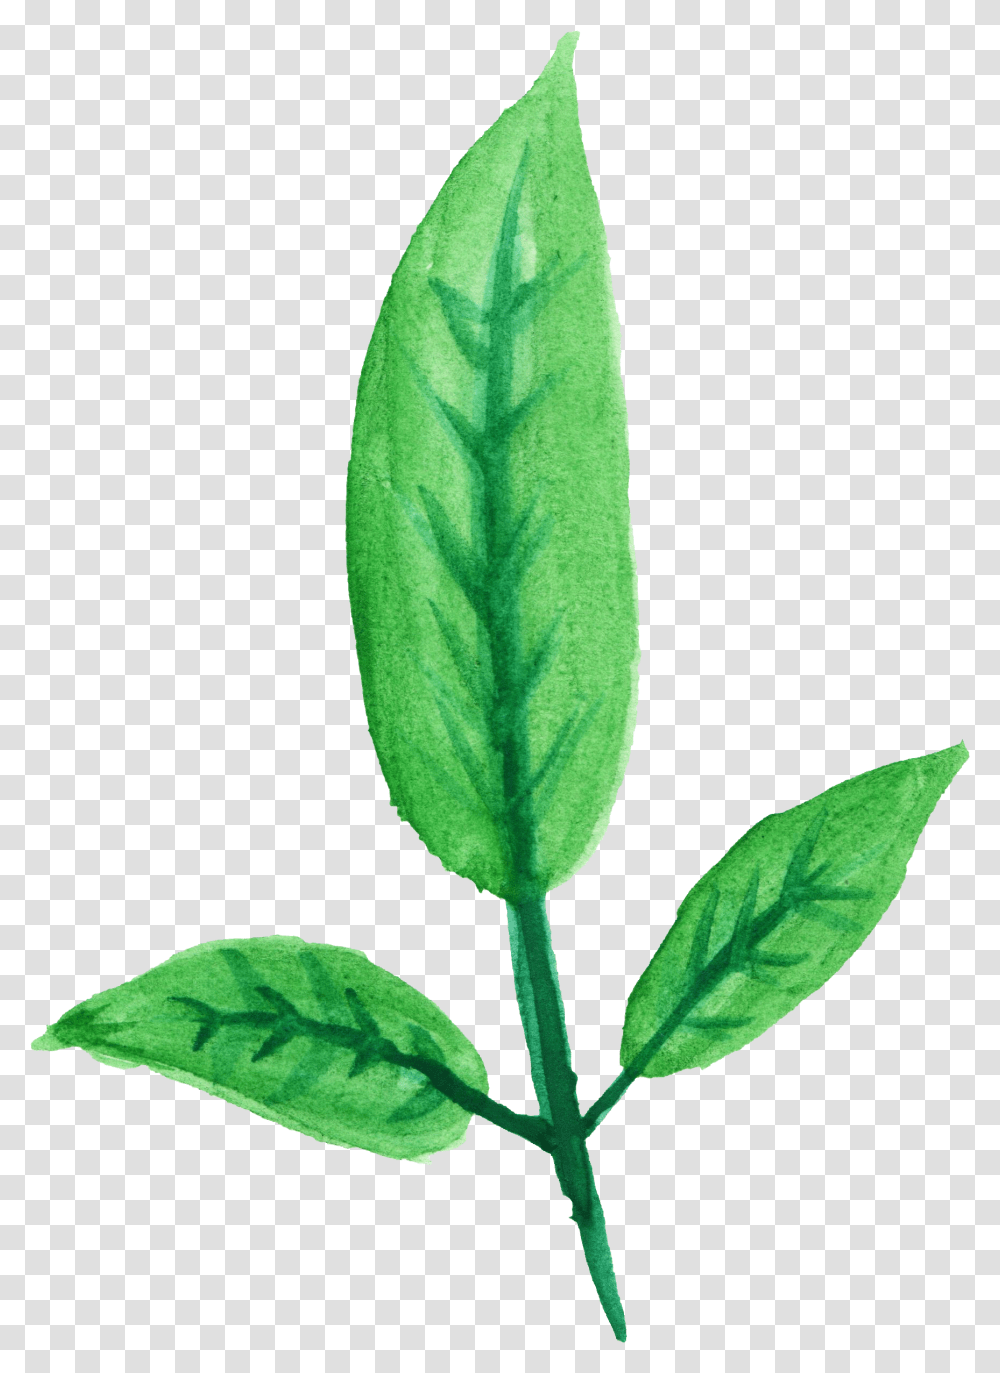 Watercolor Leaf Vol 2 Onlygfxcom 2 Leaves With Stem, Plant, Flower, Veins, Soil Transparent Png